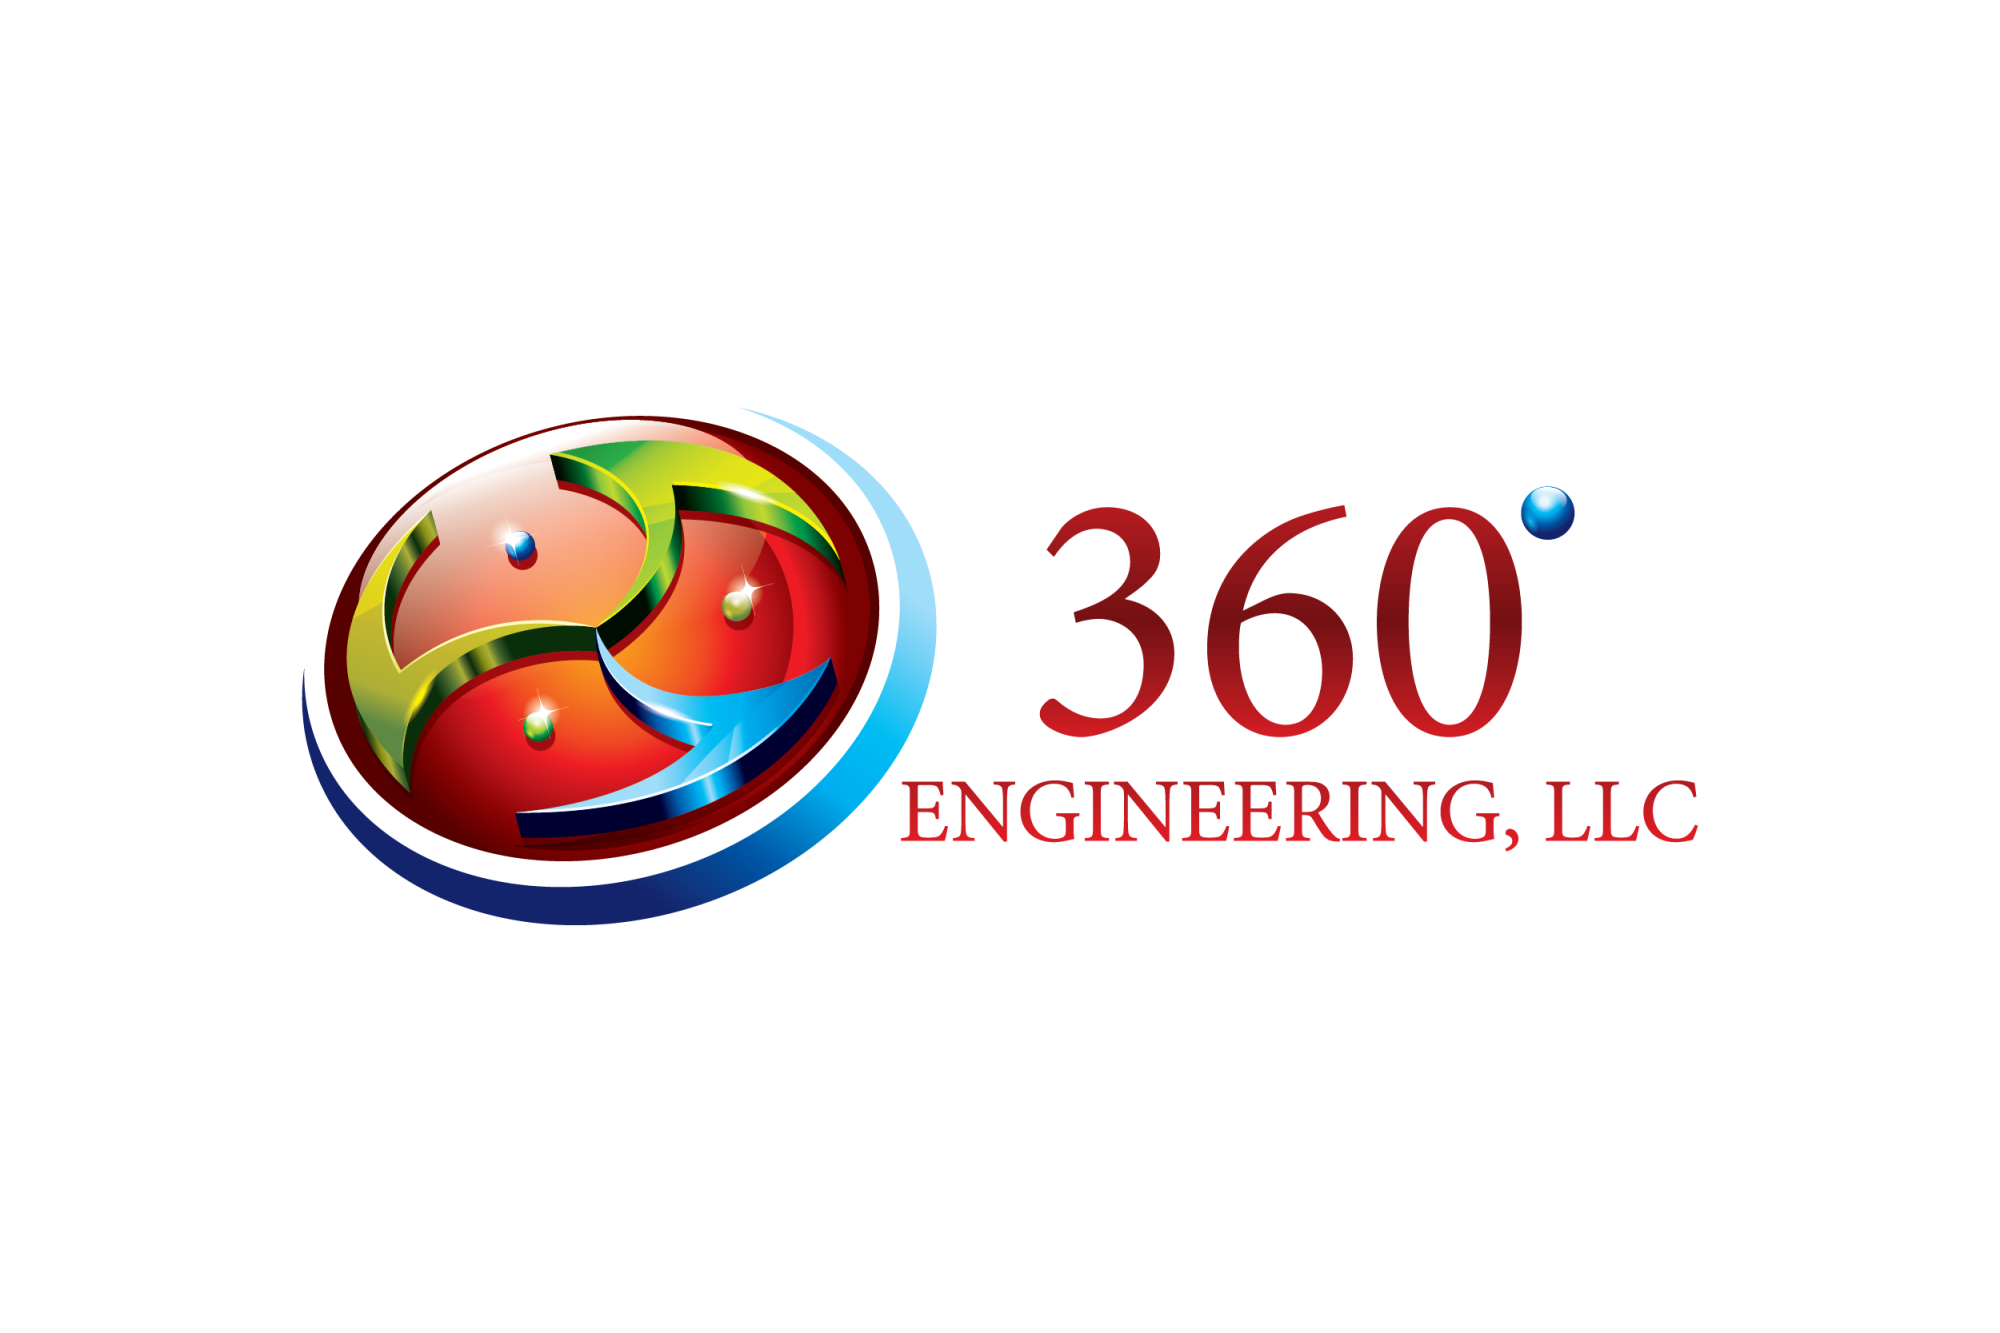 360___ENGINEERING__LLC-01.png